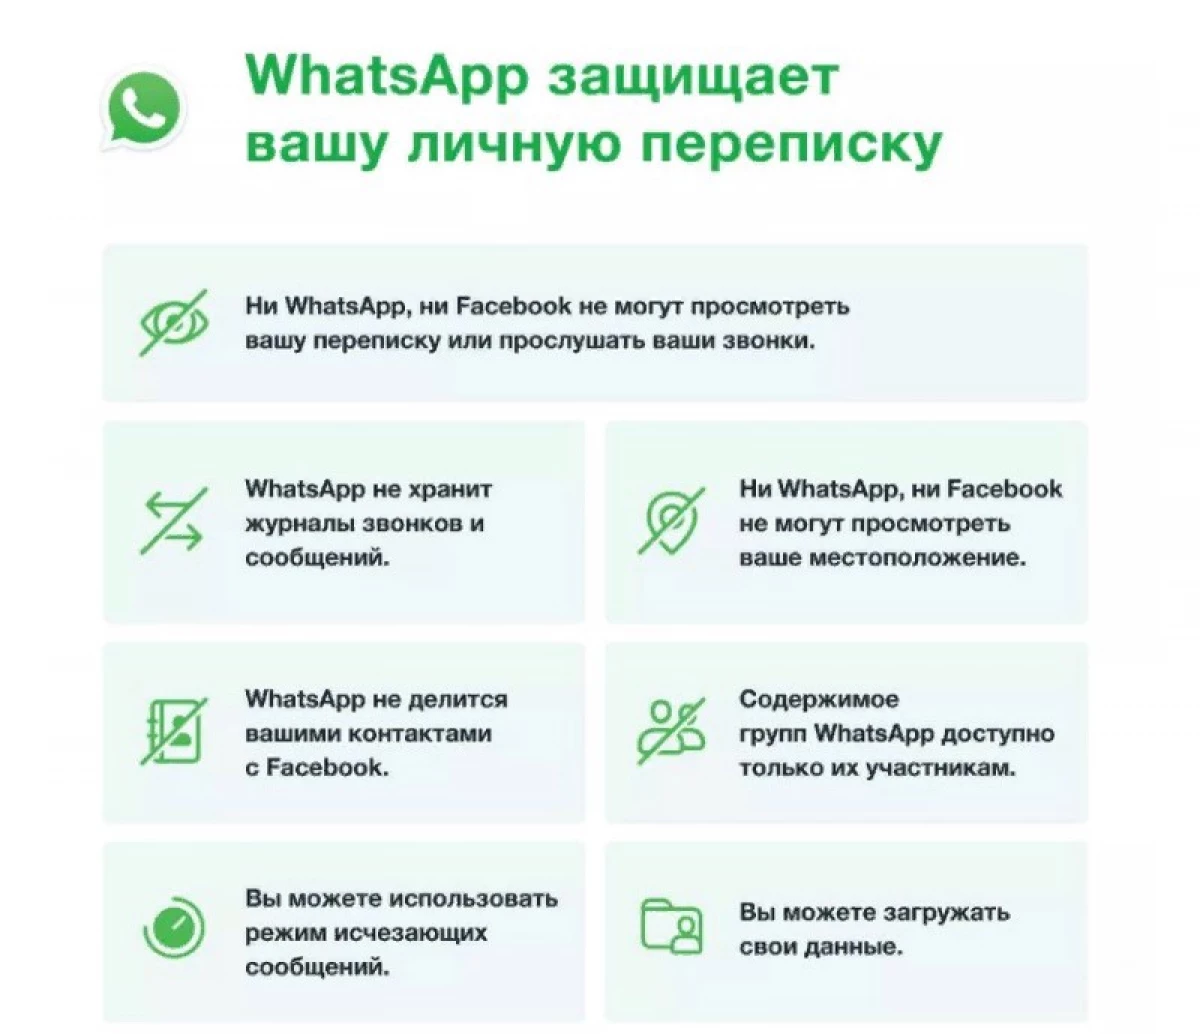 WhatsApp יהיה לשתף נתוני משתמש מ - Facebook. רשותך לא תשאל 6388_5